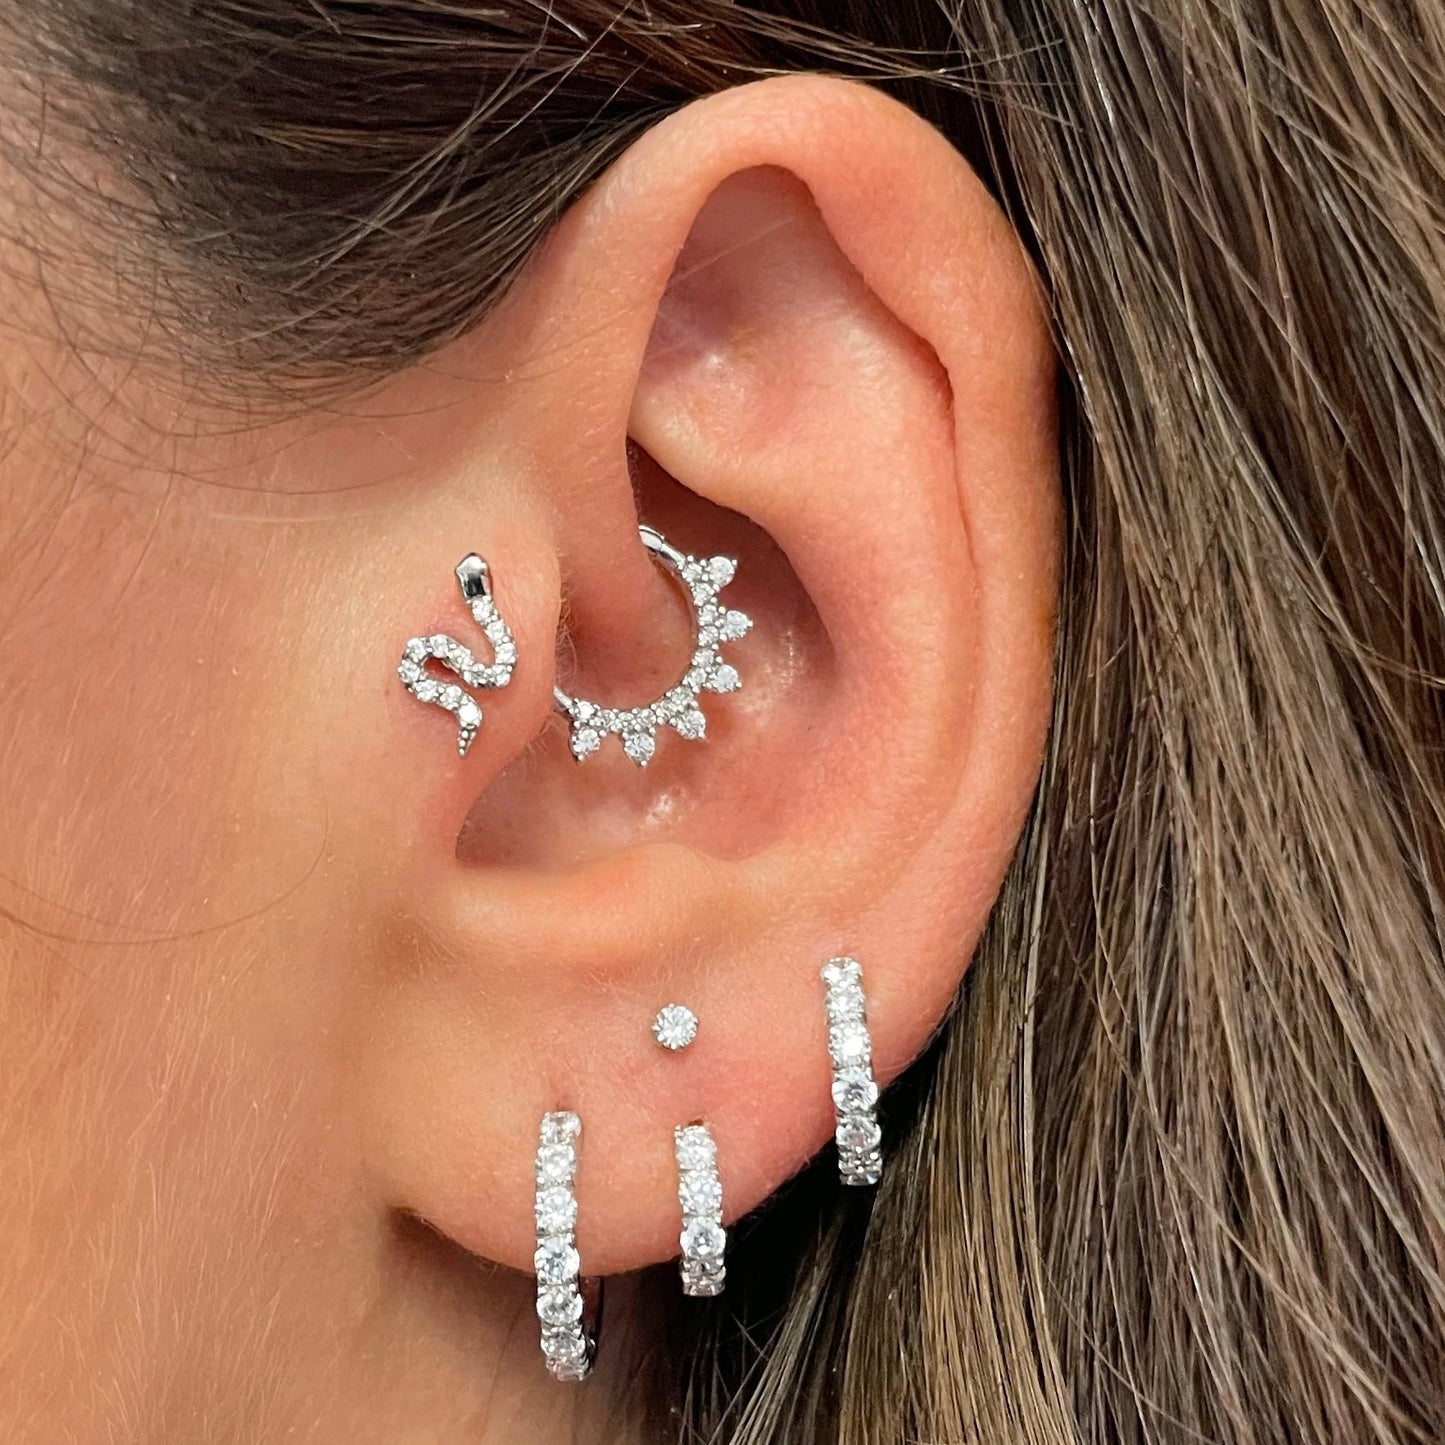 9k solid white gold 10mm simple crystal huggie earring pair